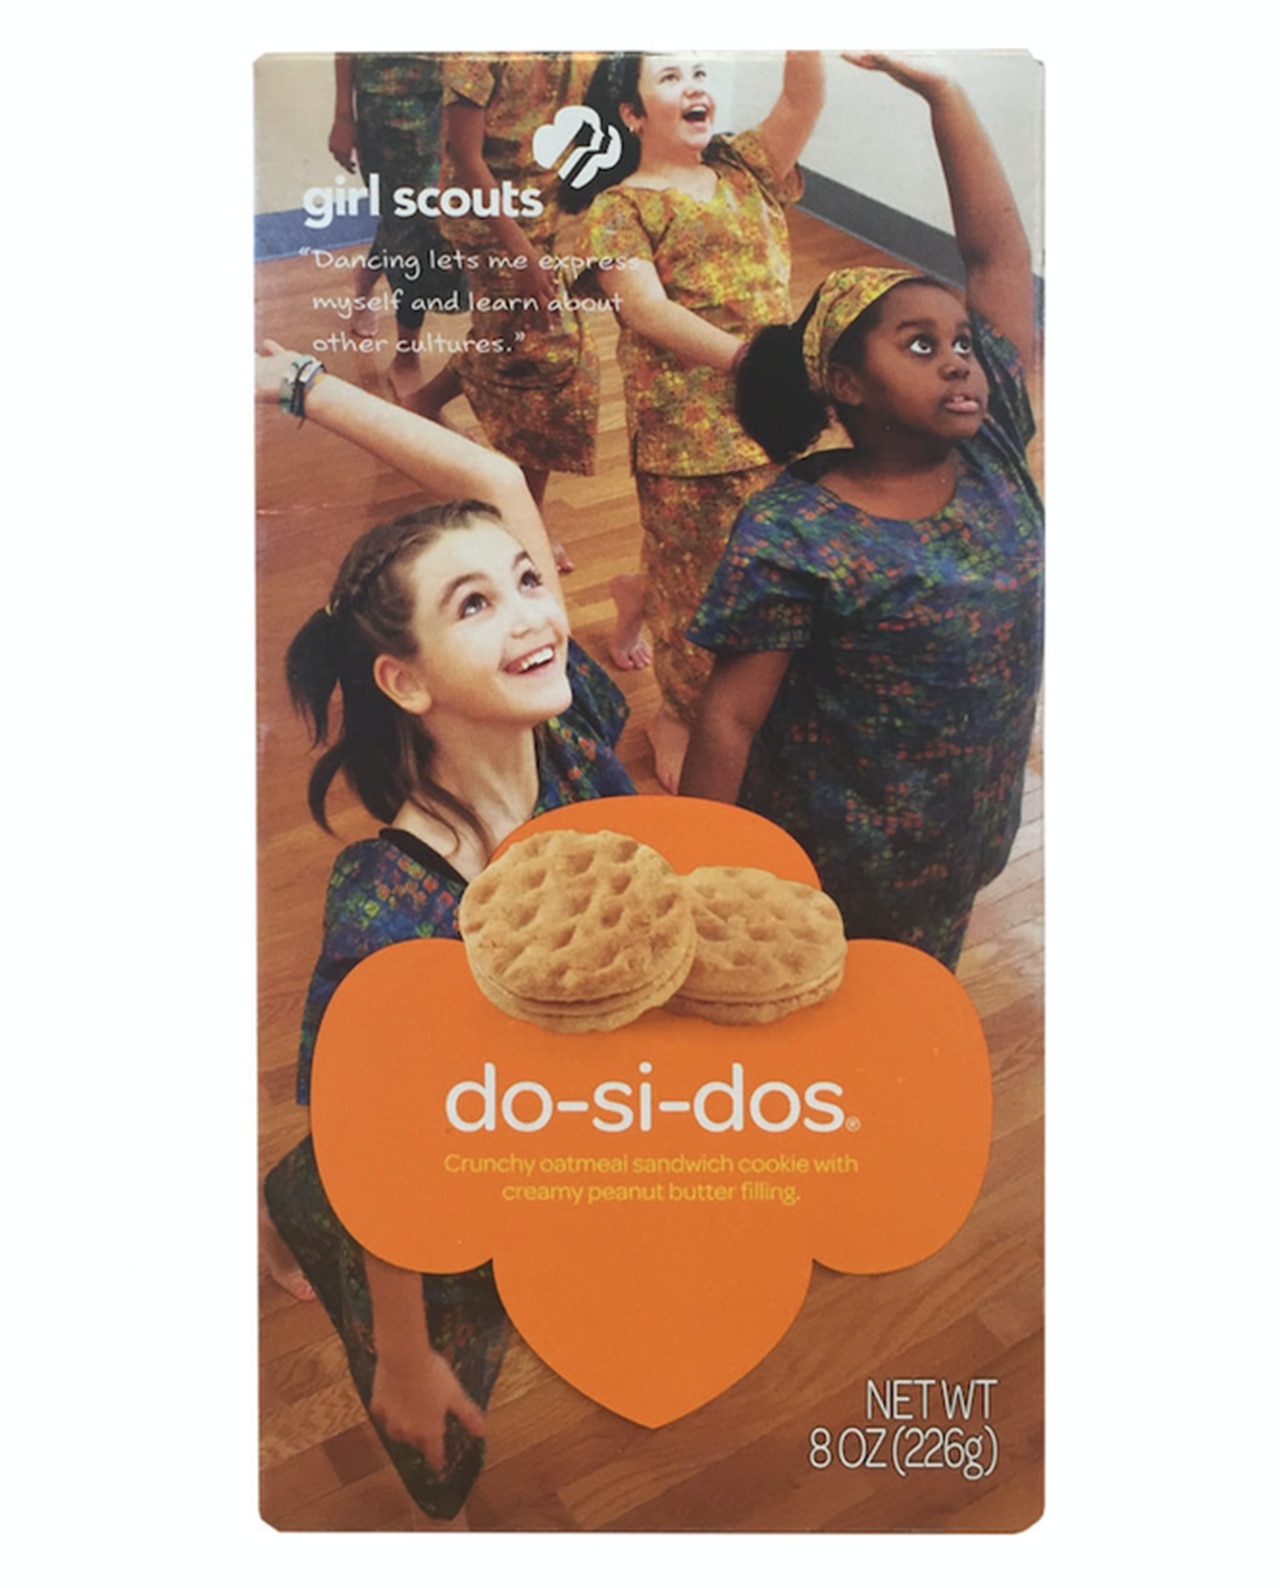 girl scout cookies trefoils